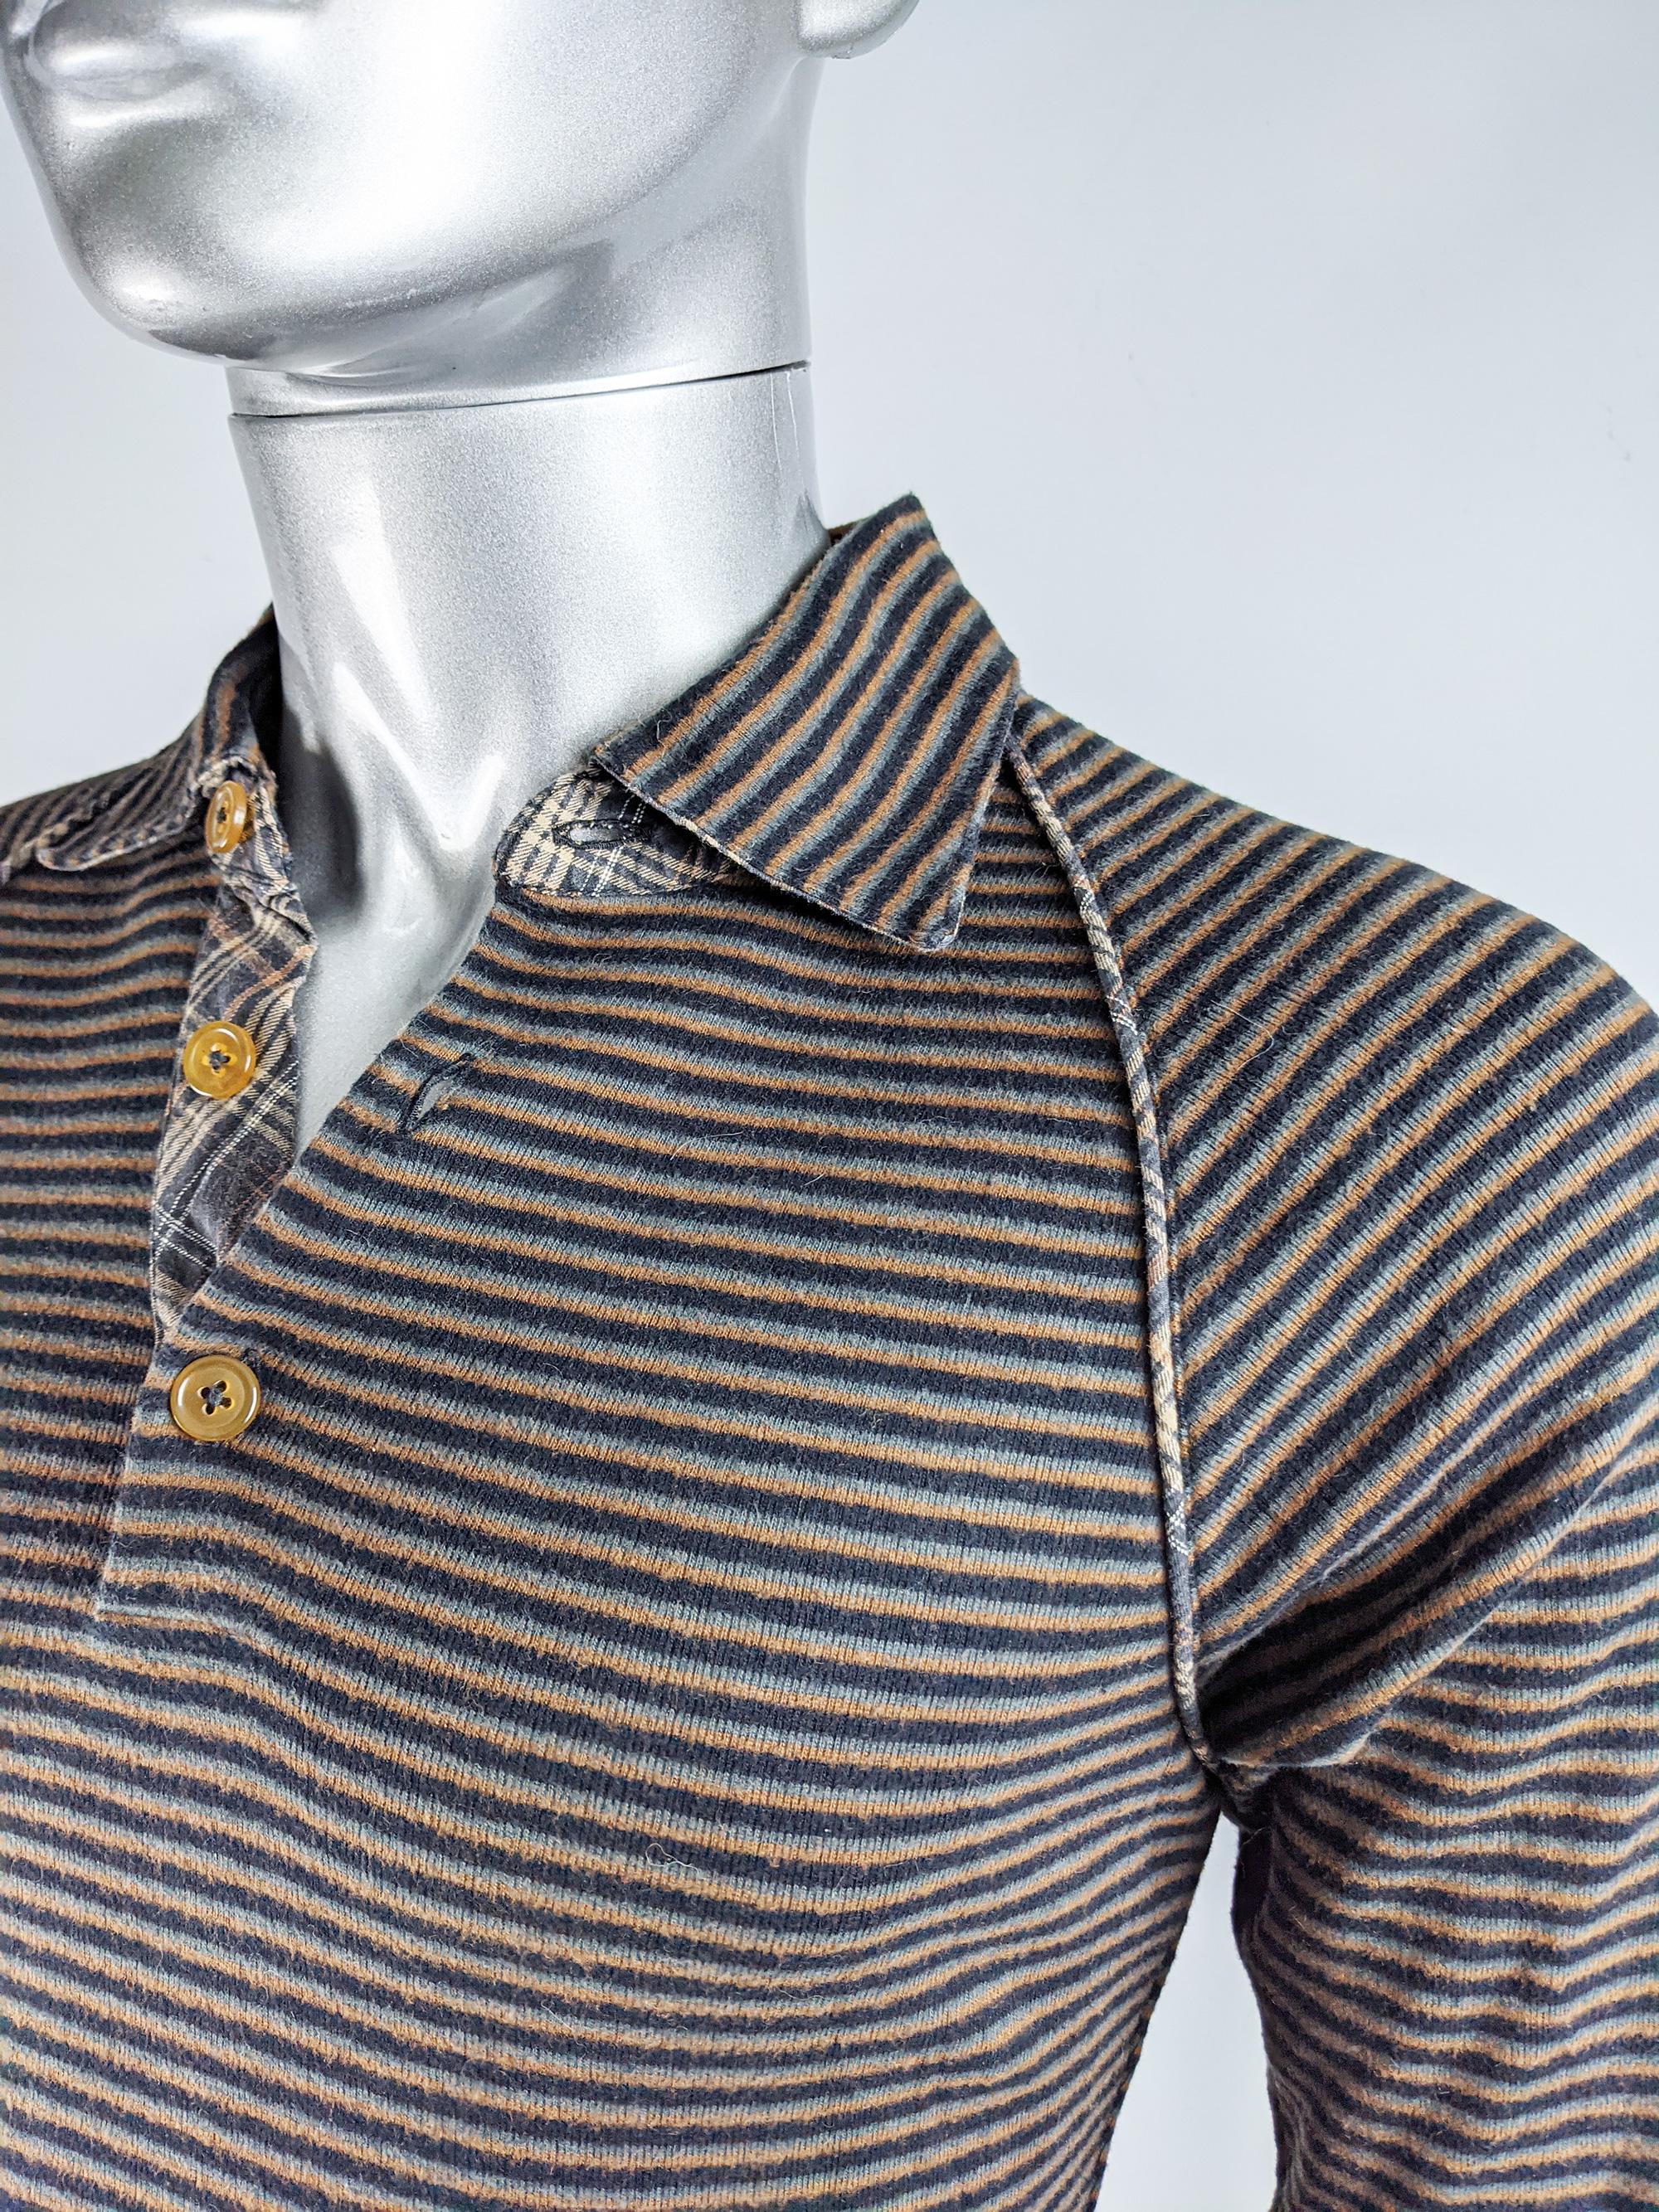 vintage striped shirt mens